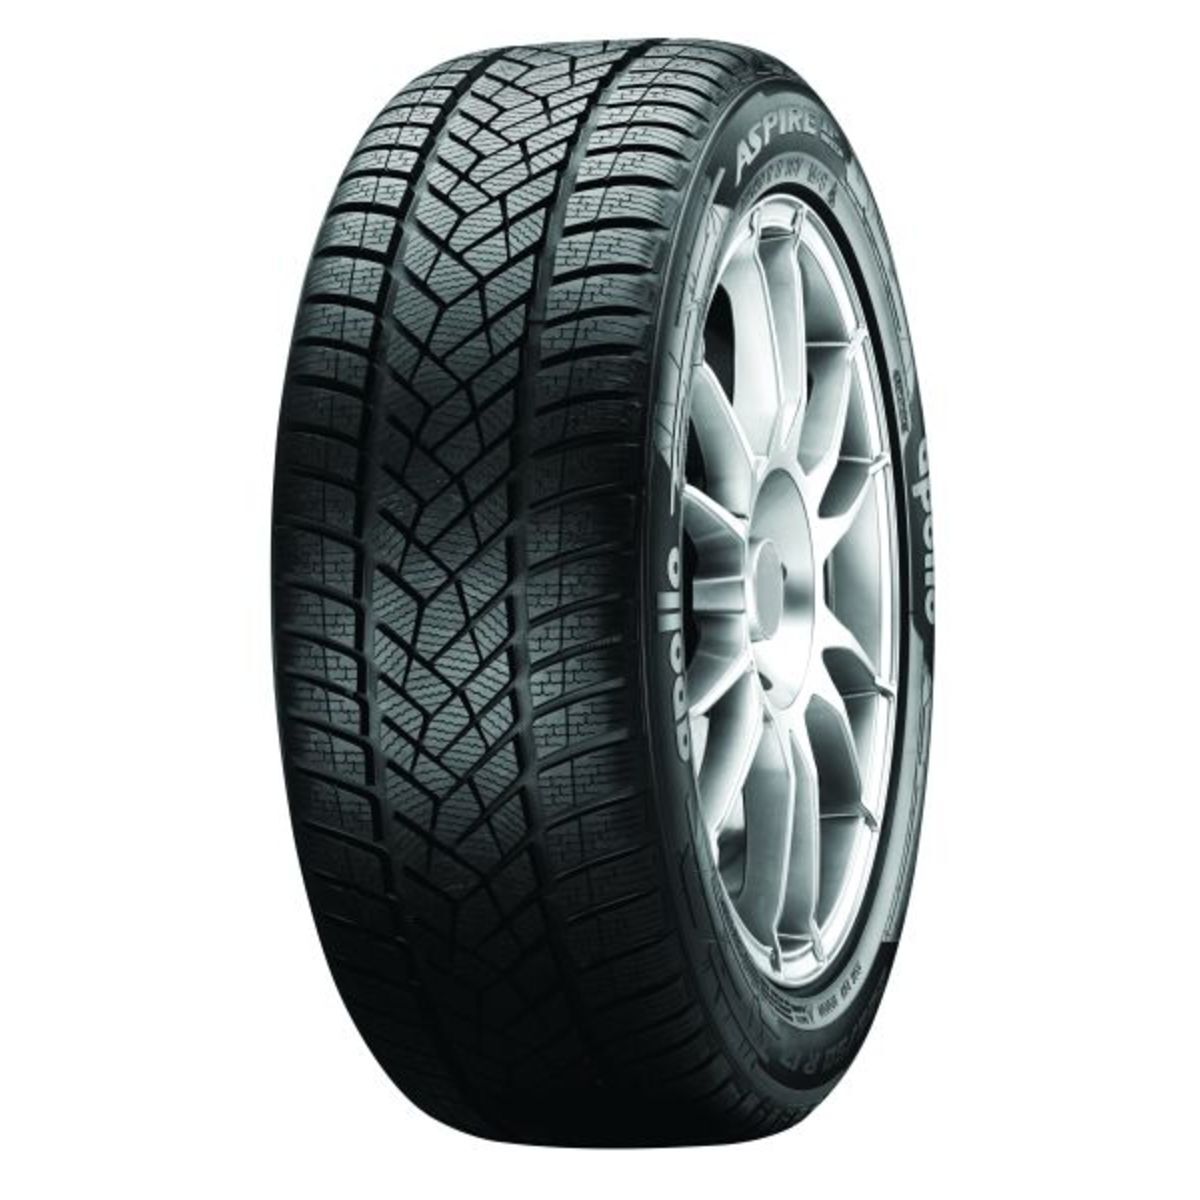 Neumáticos de invierno APOLLO Aspire XP Winter 245/40R18 XL 97V